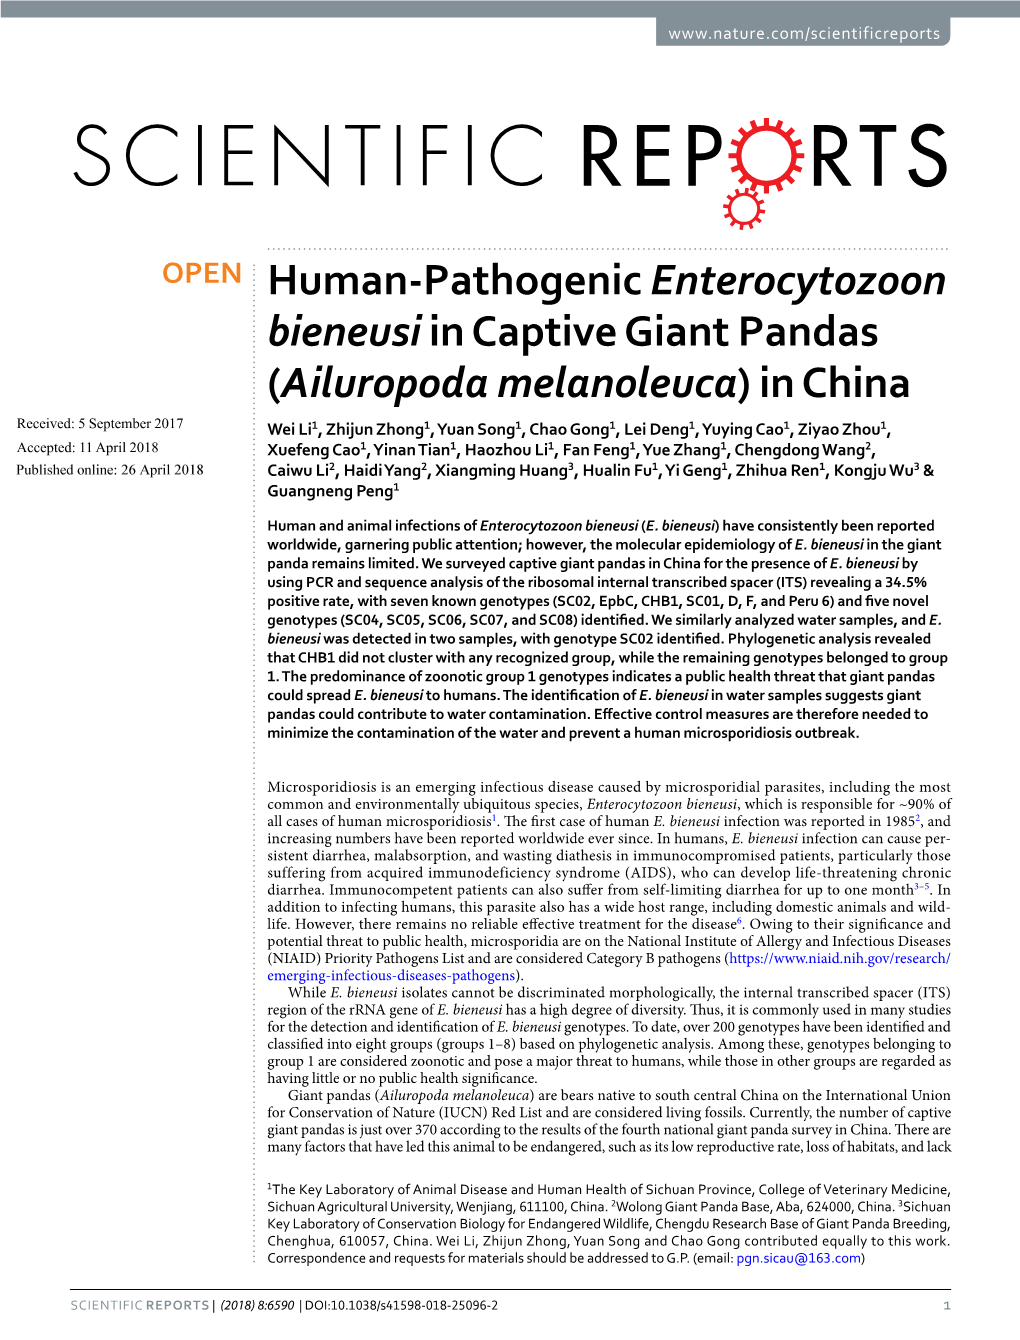 Human-Pathogenic Enterocytozoon Bieneusi in Captive Giant Pandas (Ailuropoda Melanoleuca) in China